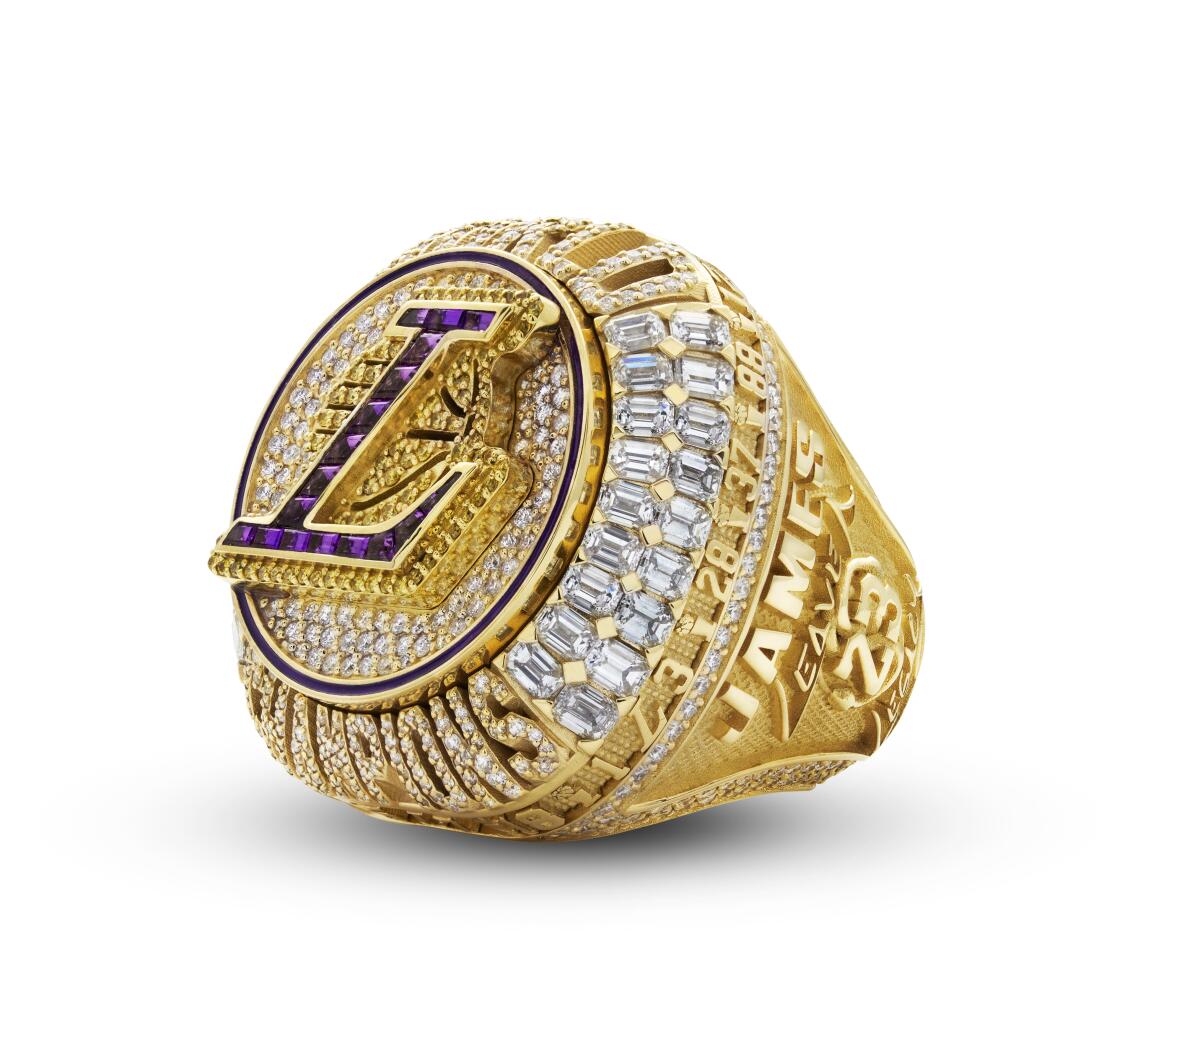 nba championship rings